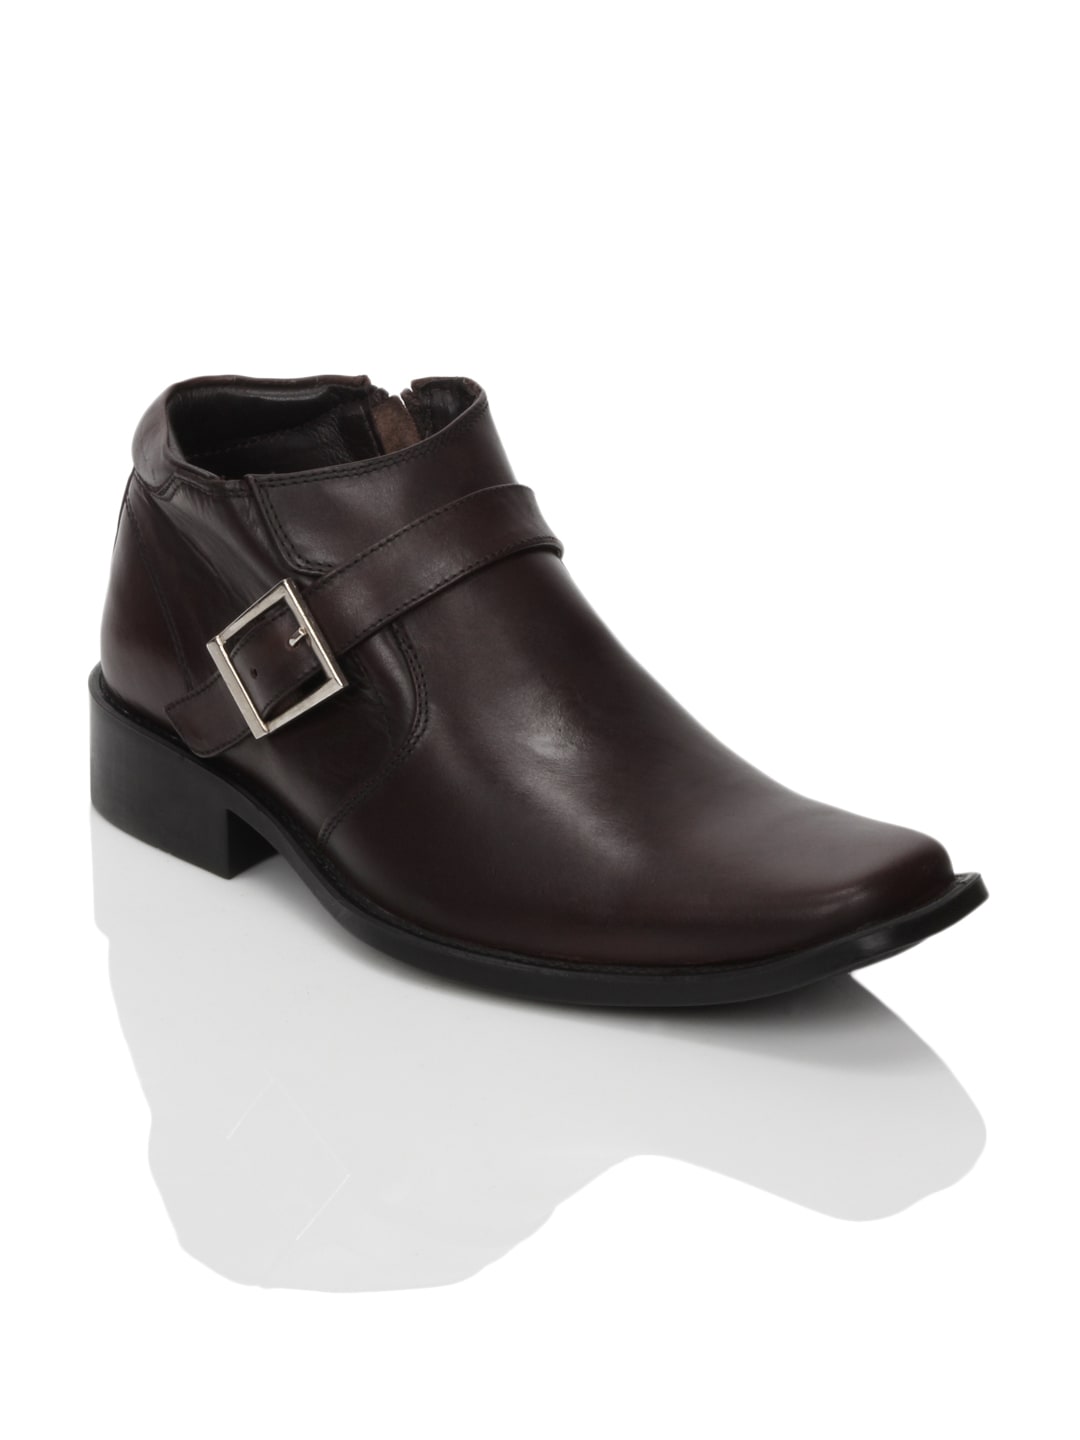 Franco Leone Men Boot Brown Formal Shoes